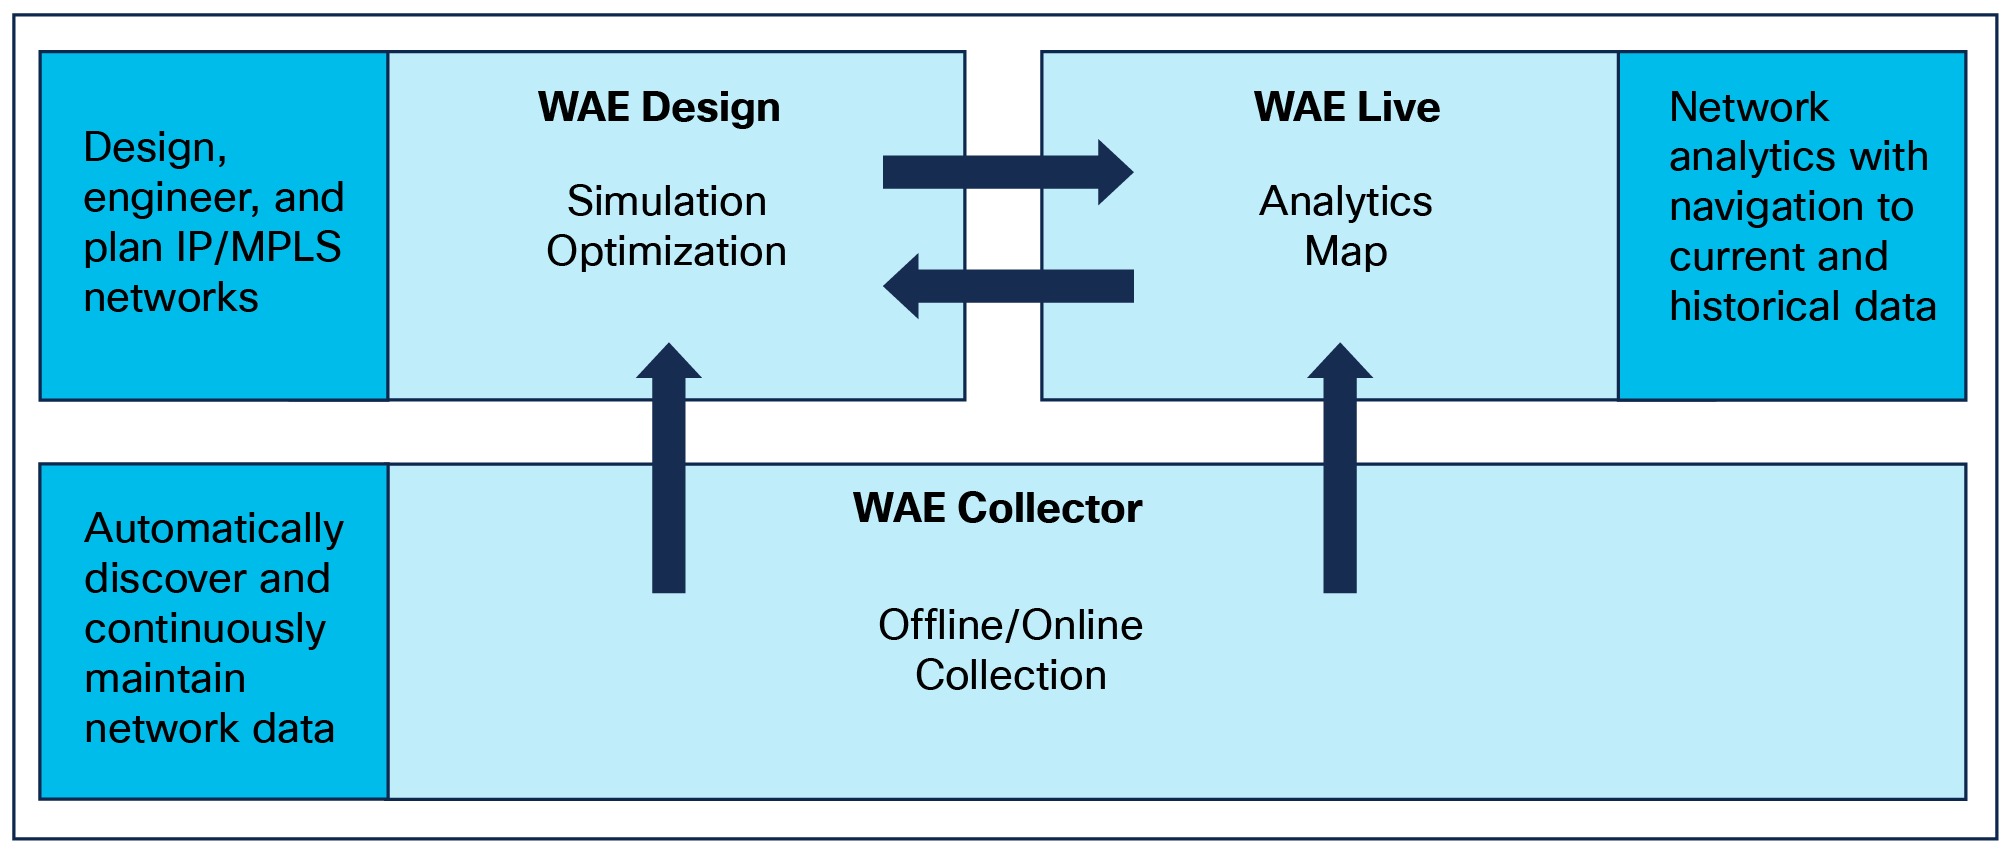 Key Purpose of Each WAE Product